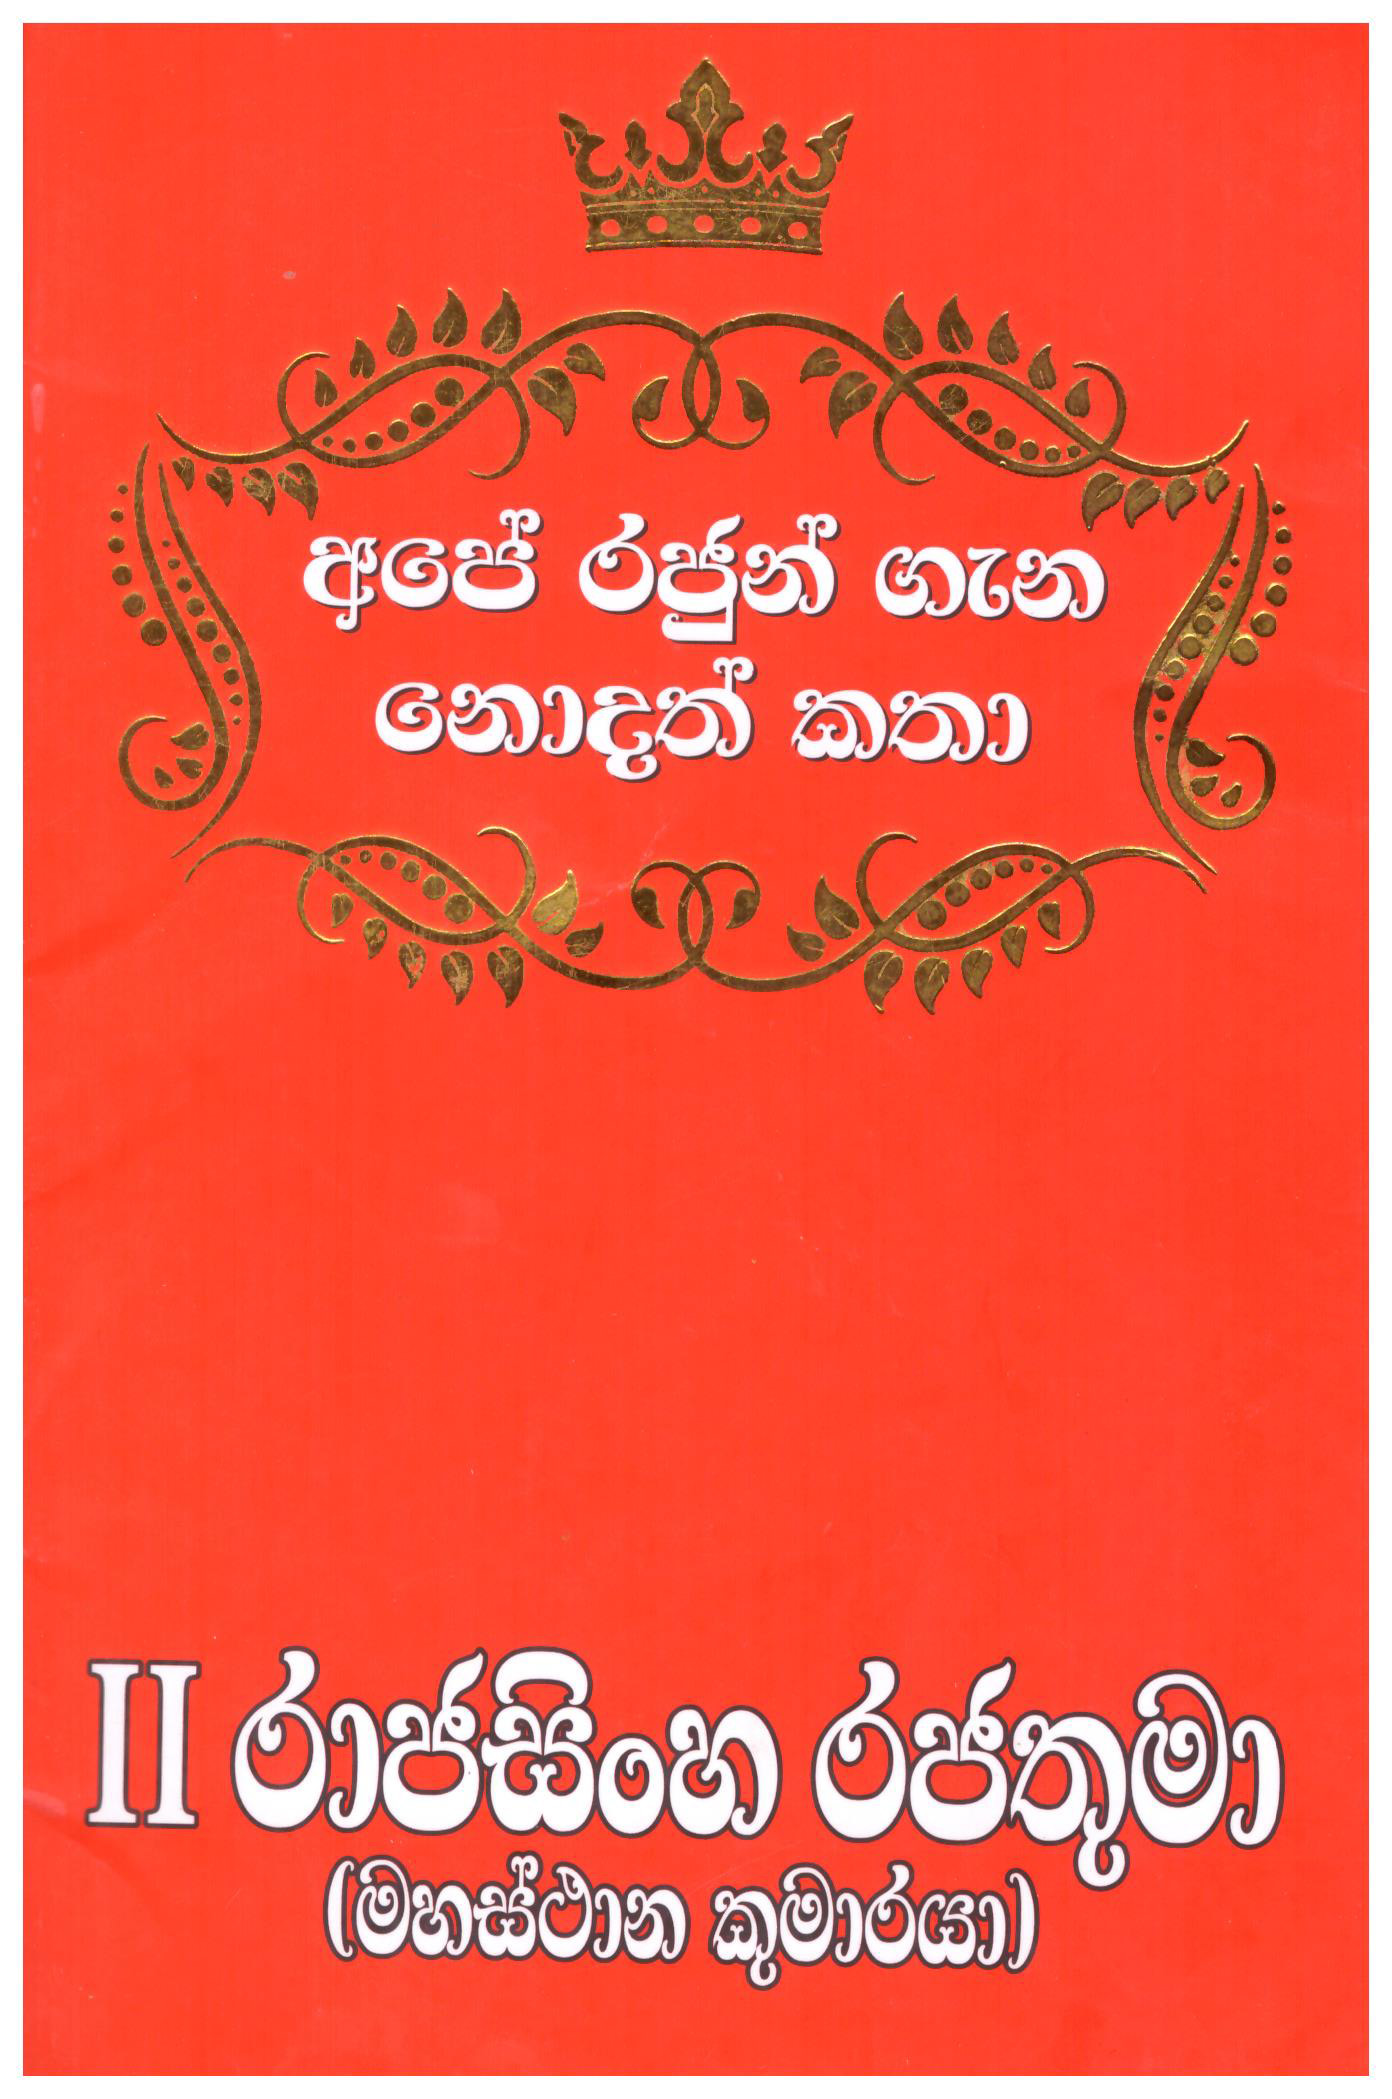 Ape Rajun Gana Nodath Katha II Rajasinghe Rajathuma ( Mahasthana Kumaraya )